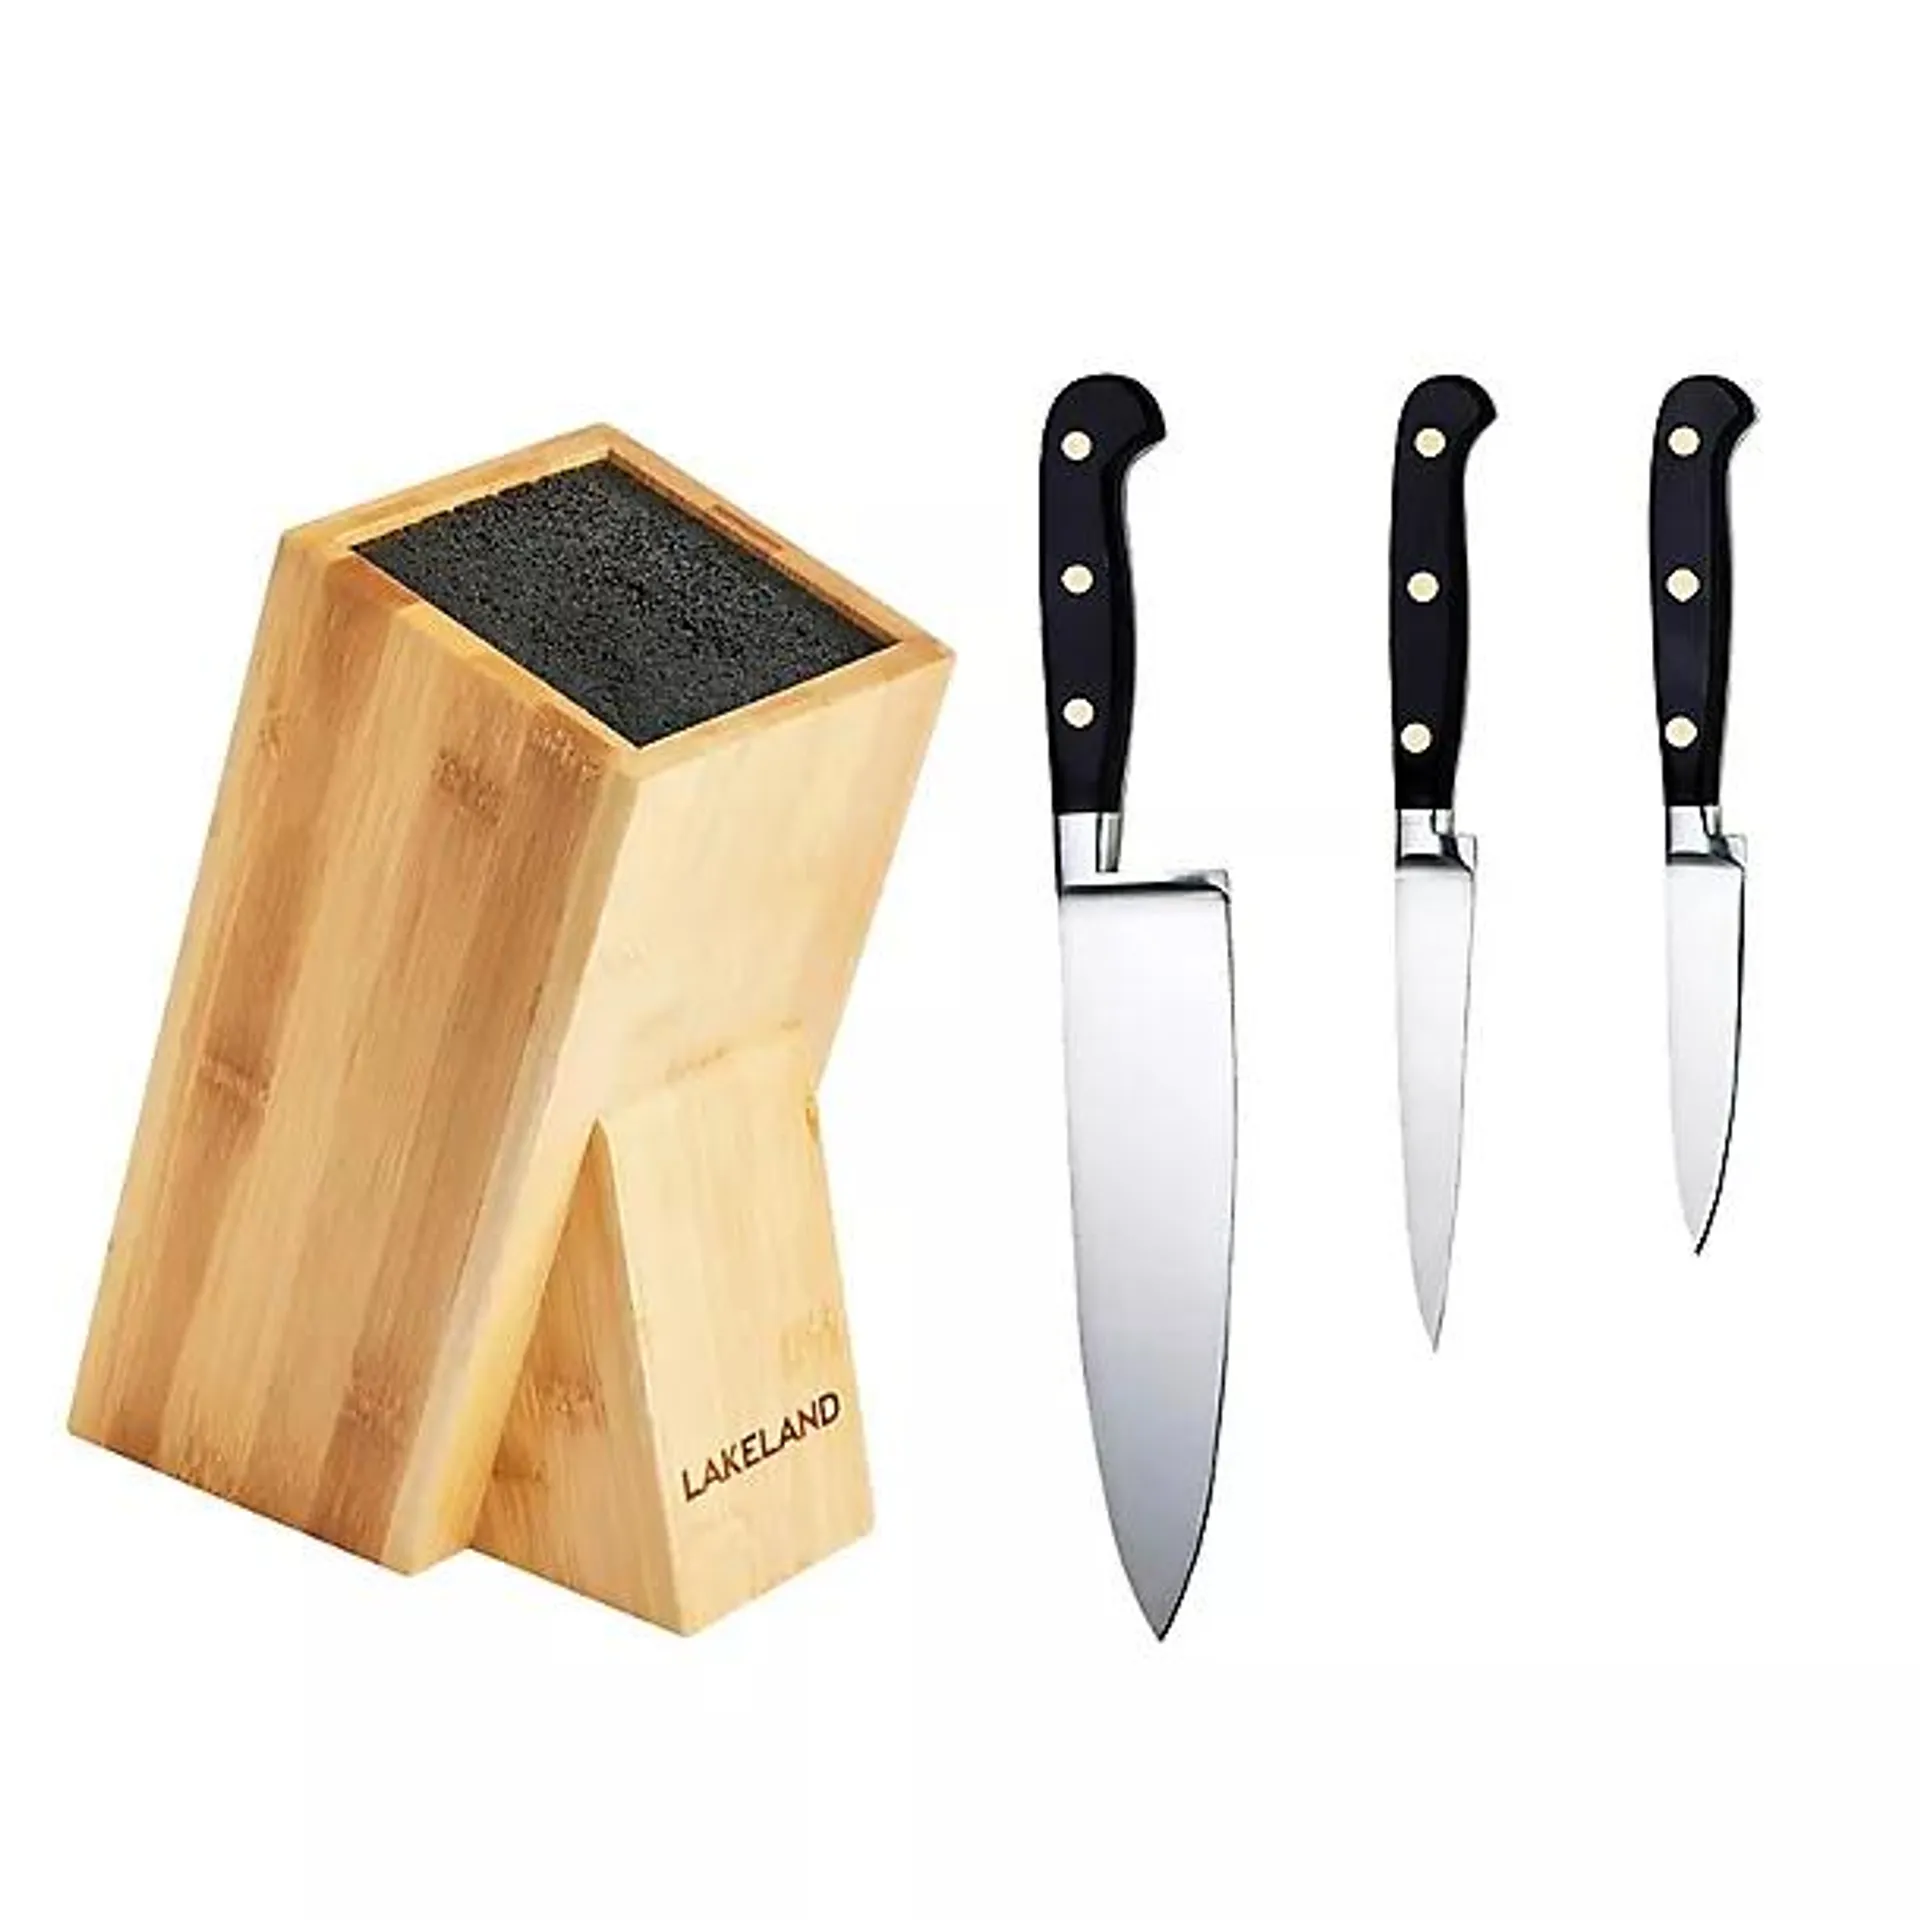 Lakeland Bamboo Universal Knife Block and Fully Forged 3-Piece Knife Bundle